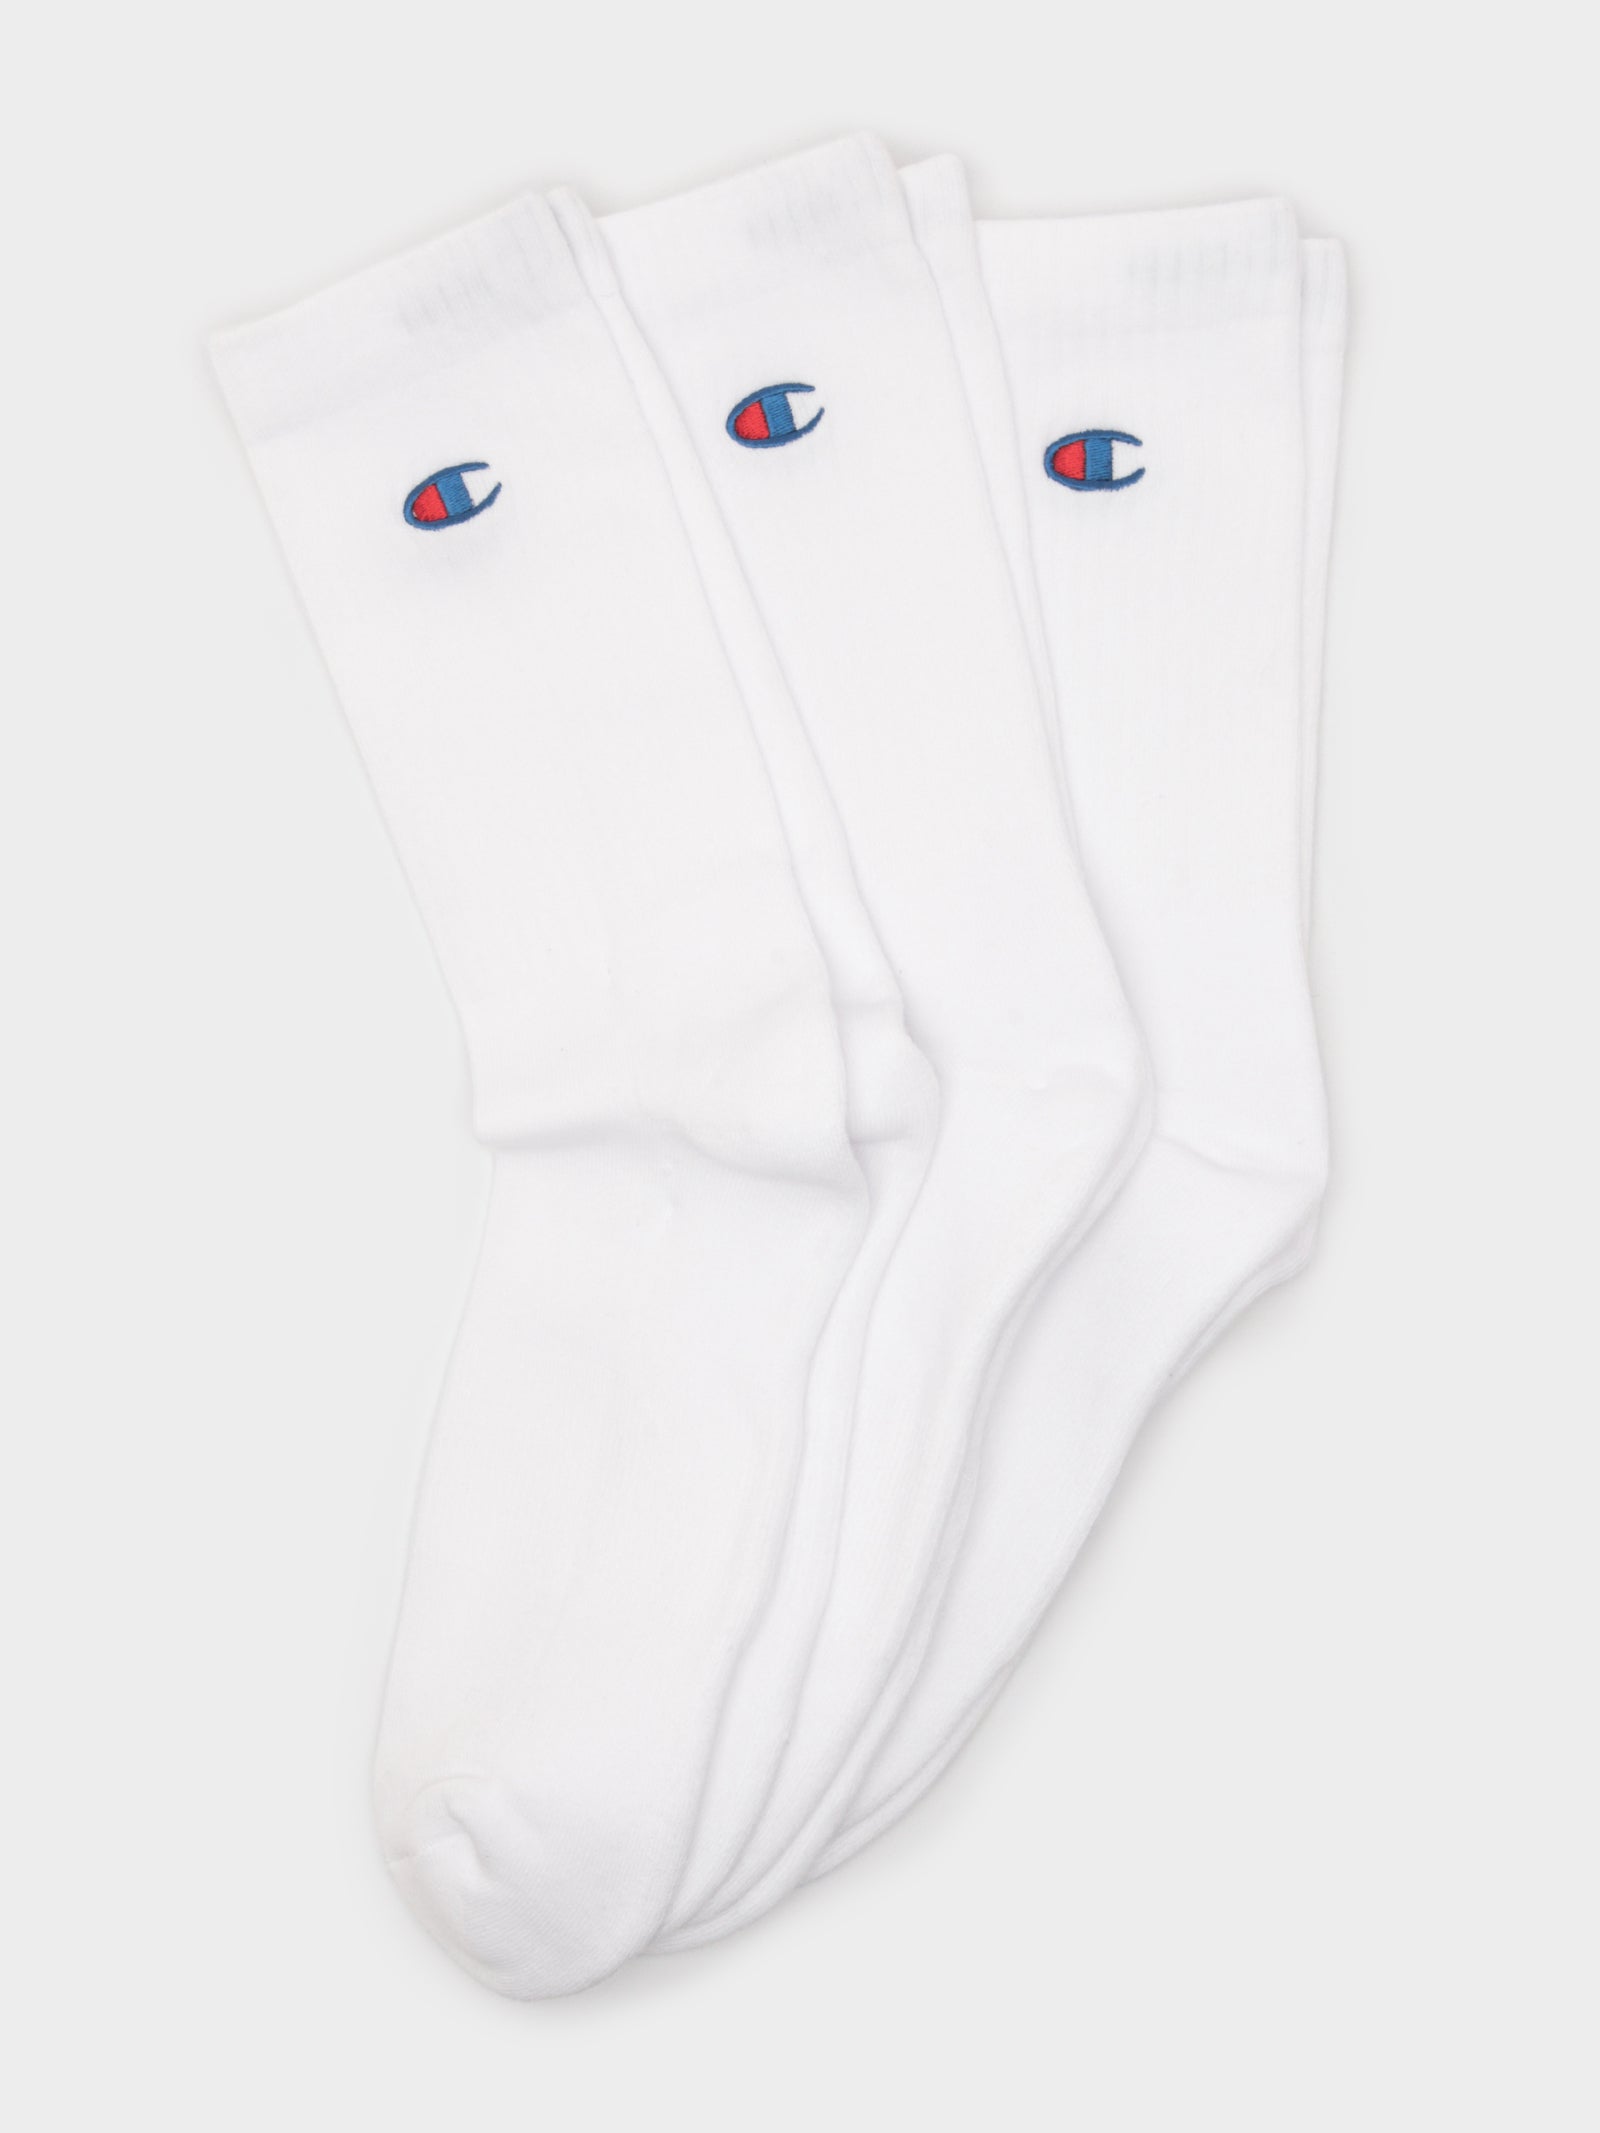 3 Pairs of Lifestyle C Logo Crew Socks in White